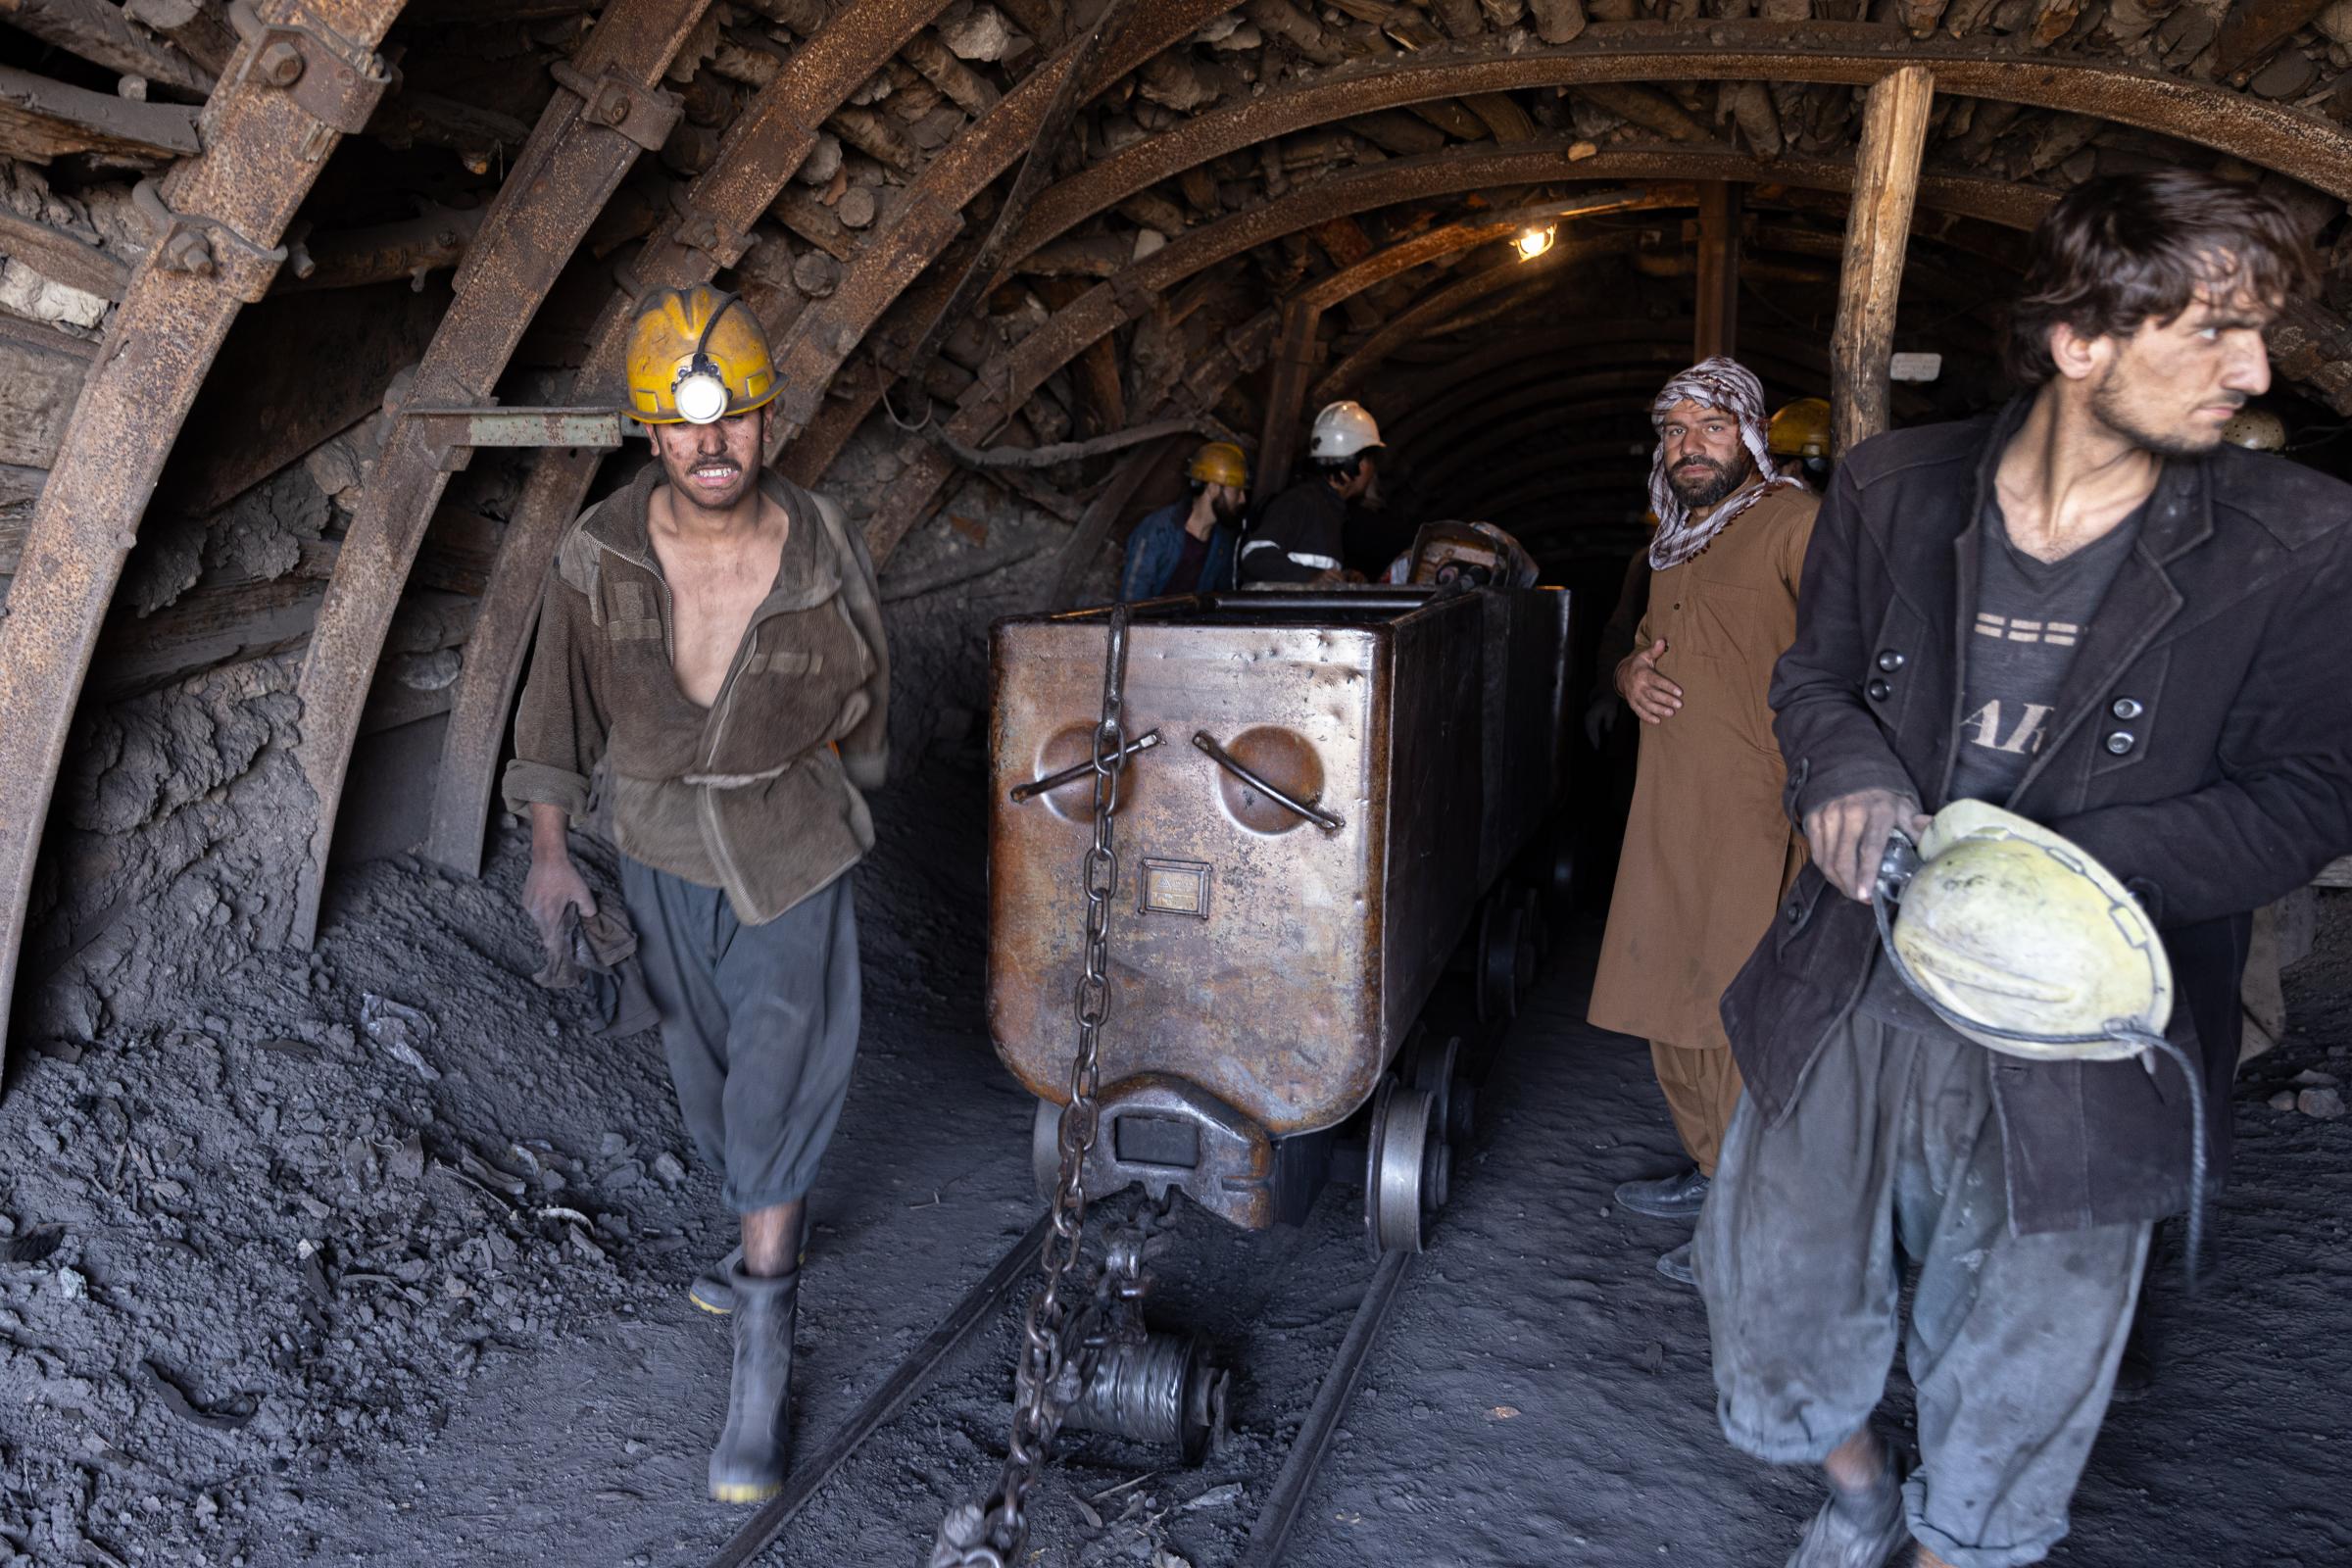 Mines of Afghanistan